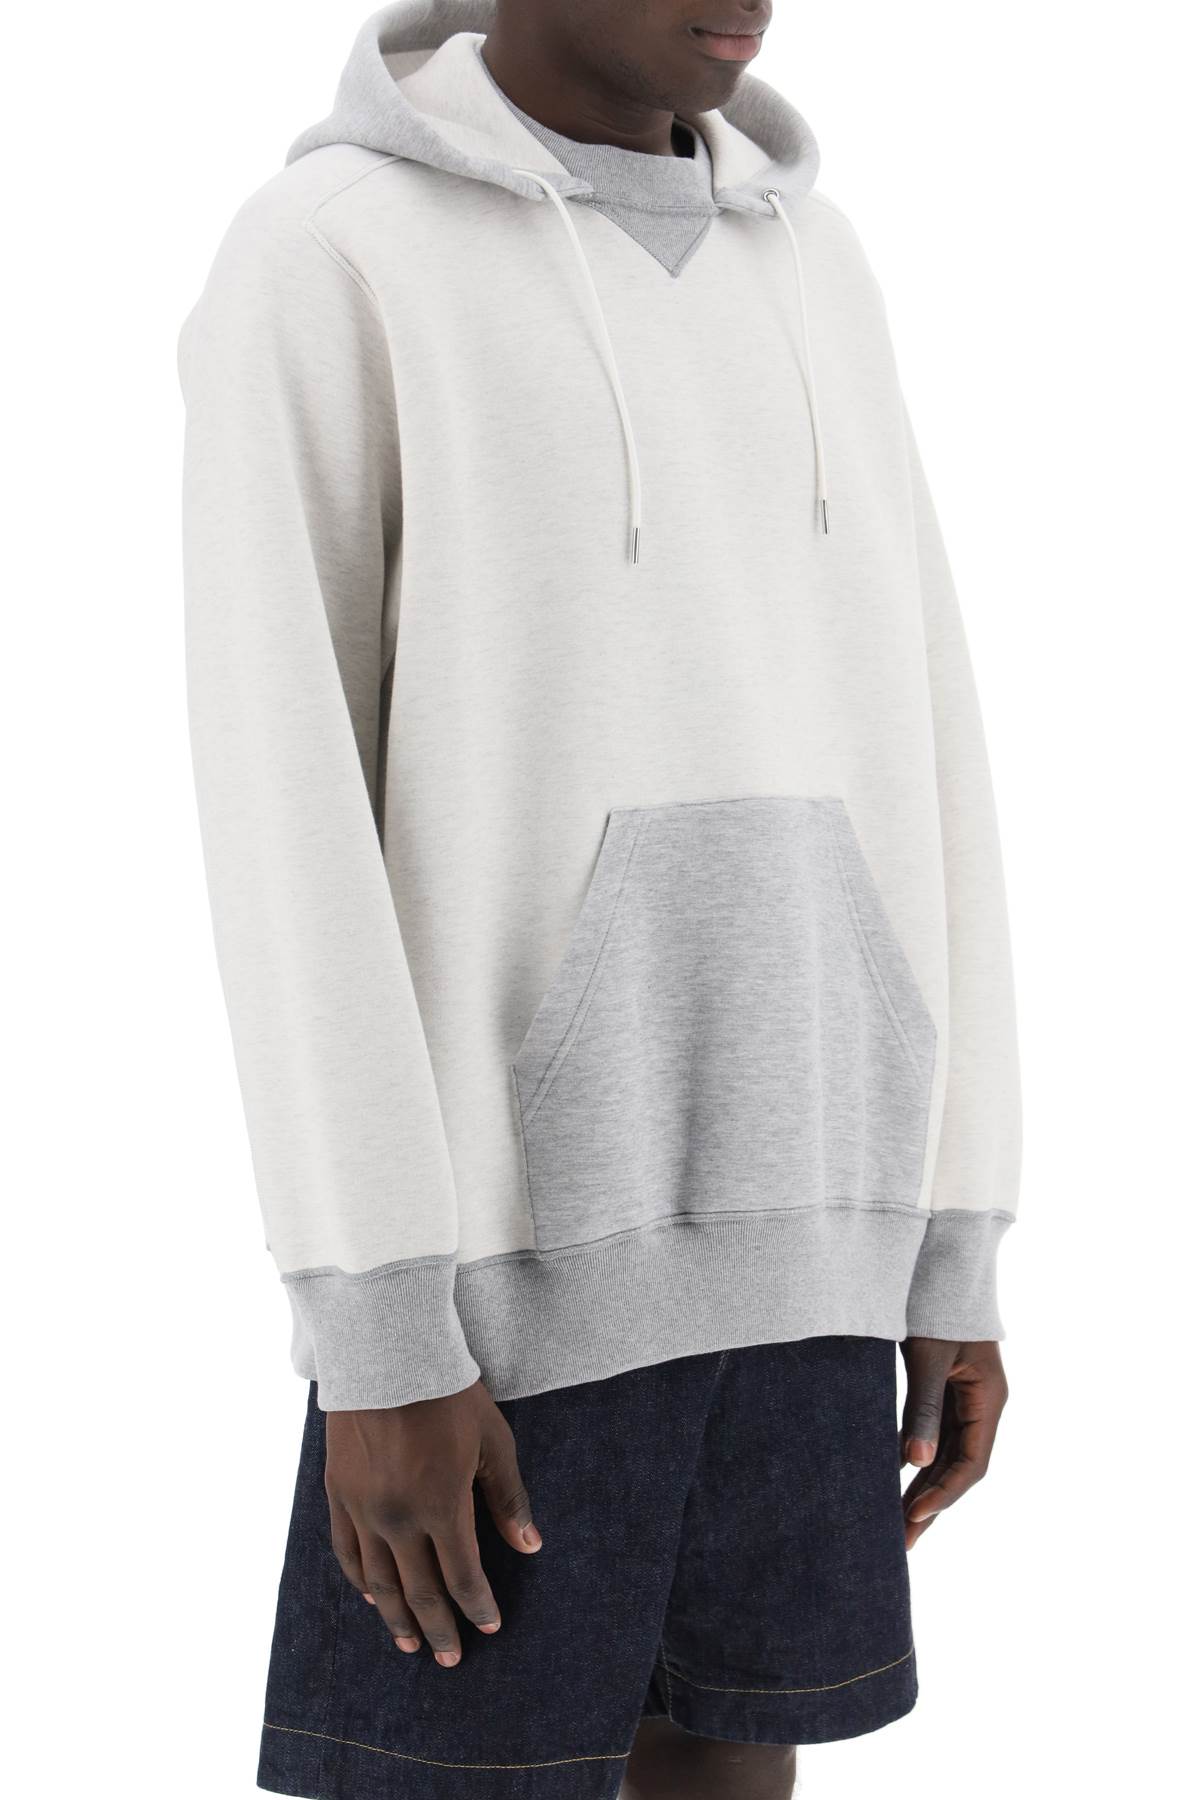 Sacai hooded sweatshirt with reverse-1